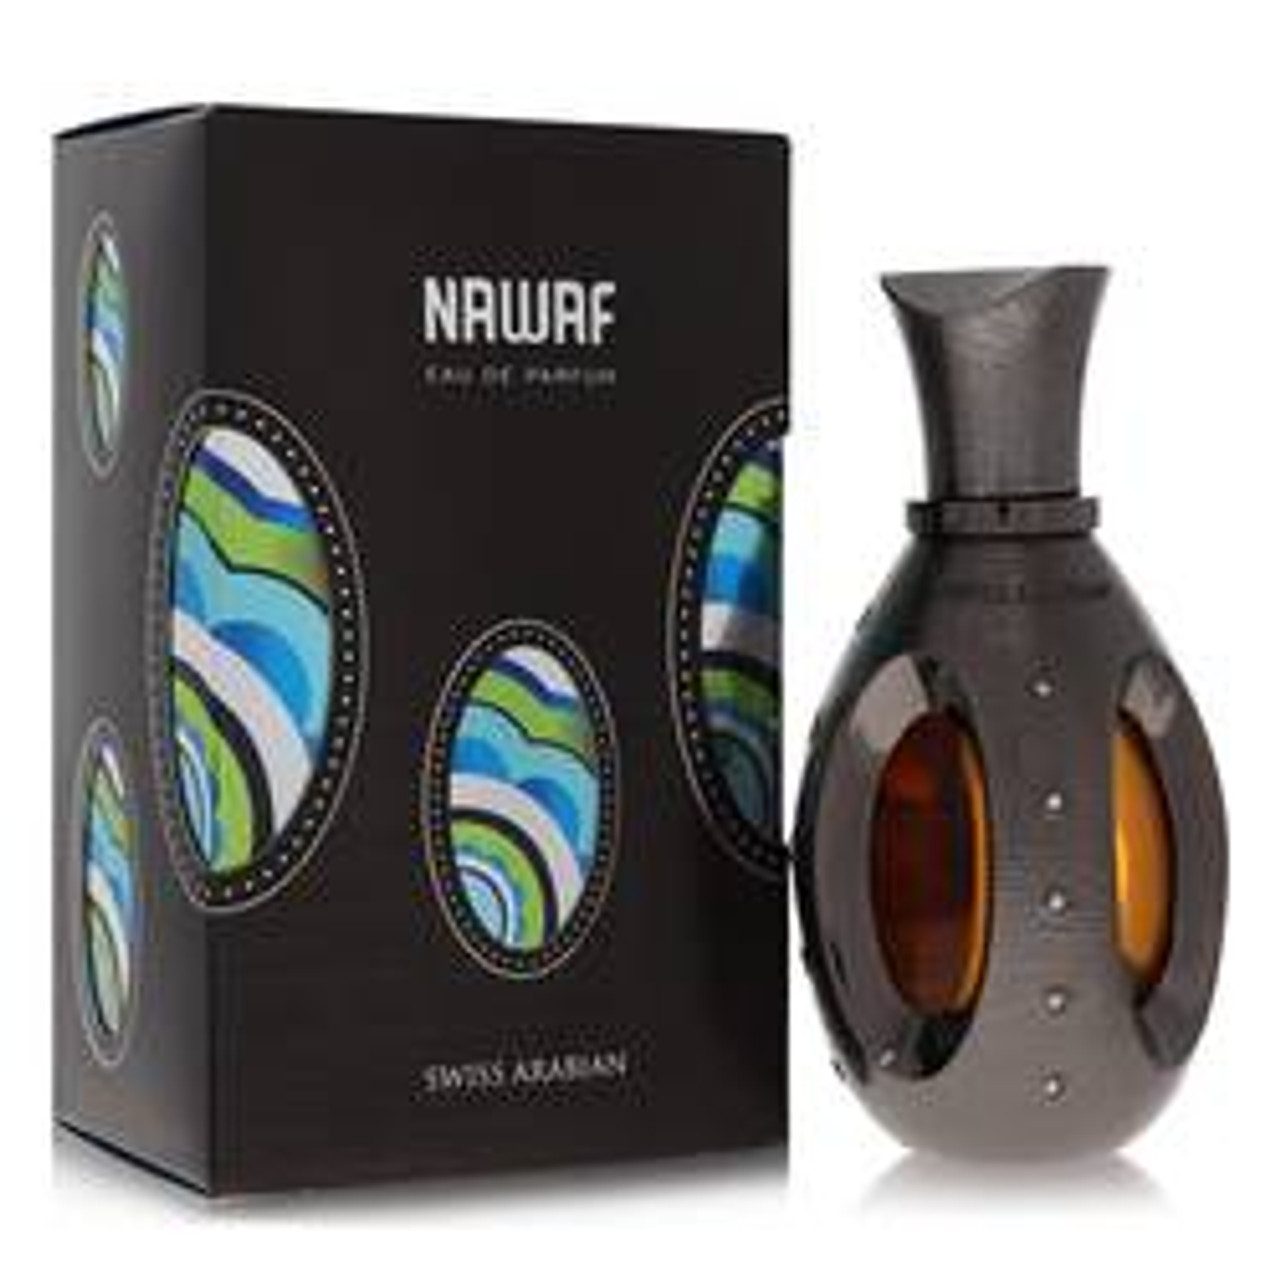 Nawaf Cologne By Swiss Arabian Eau De Parfum Spray 1.7 oz for Men - *Pre-Order